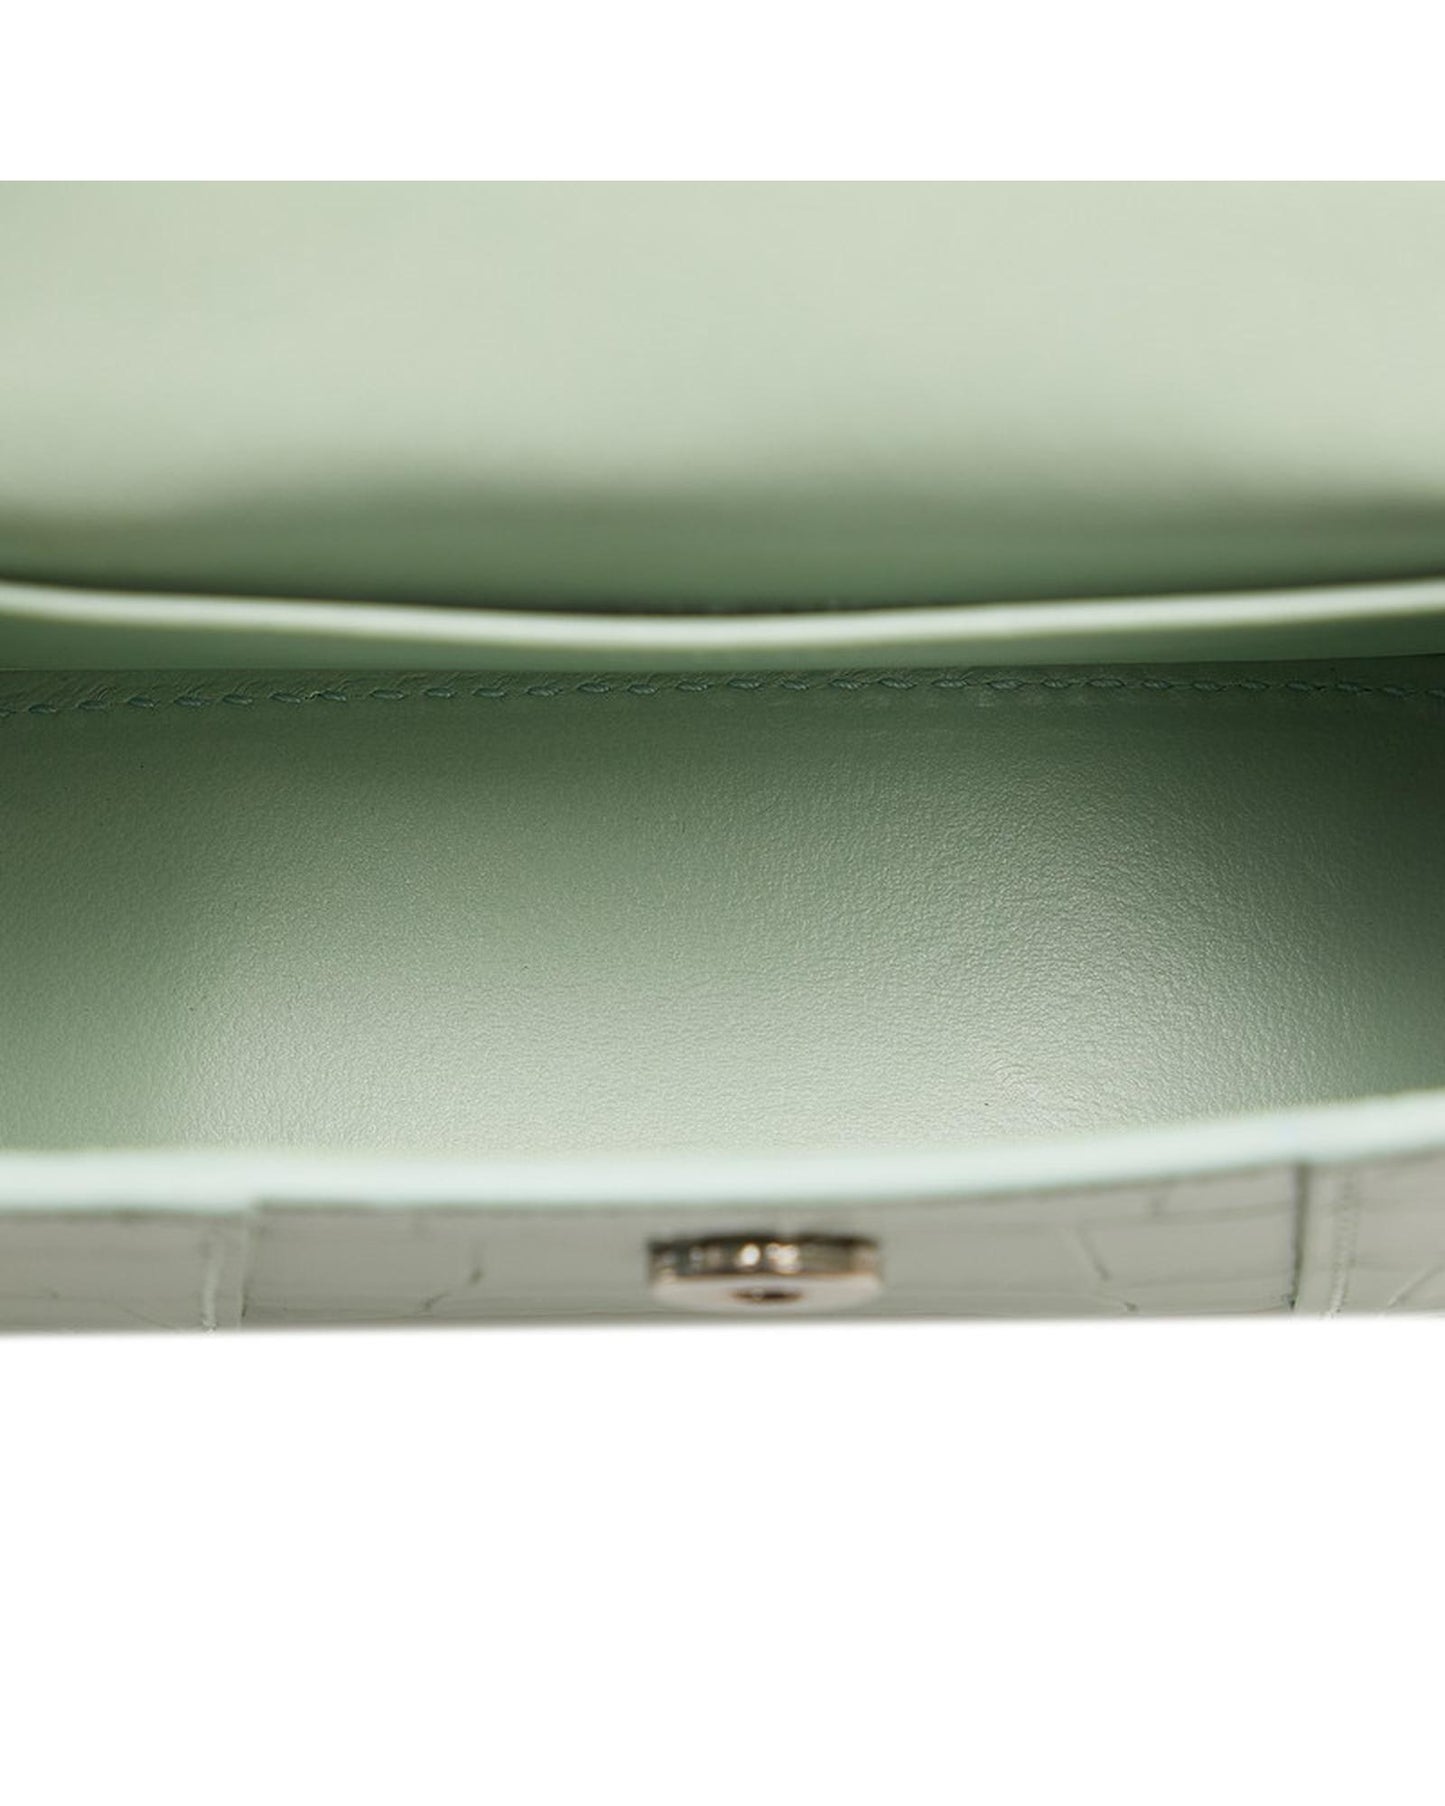 Balenciaga Women's Green Leather Hourglass Mini Handbag - A Condition in Green